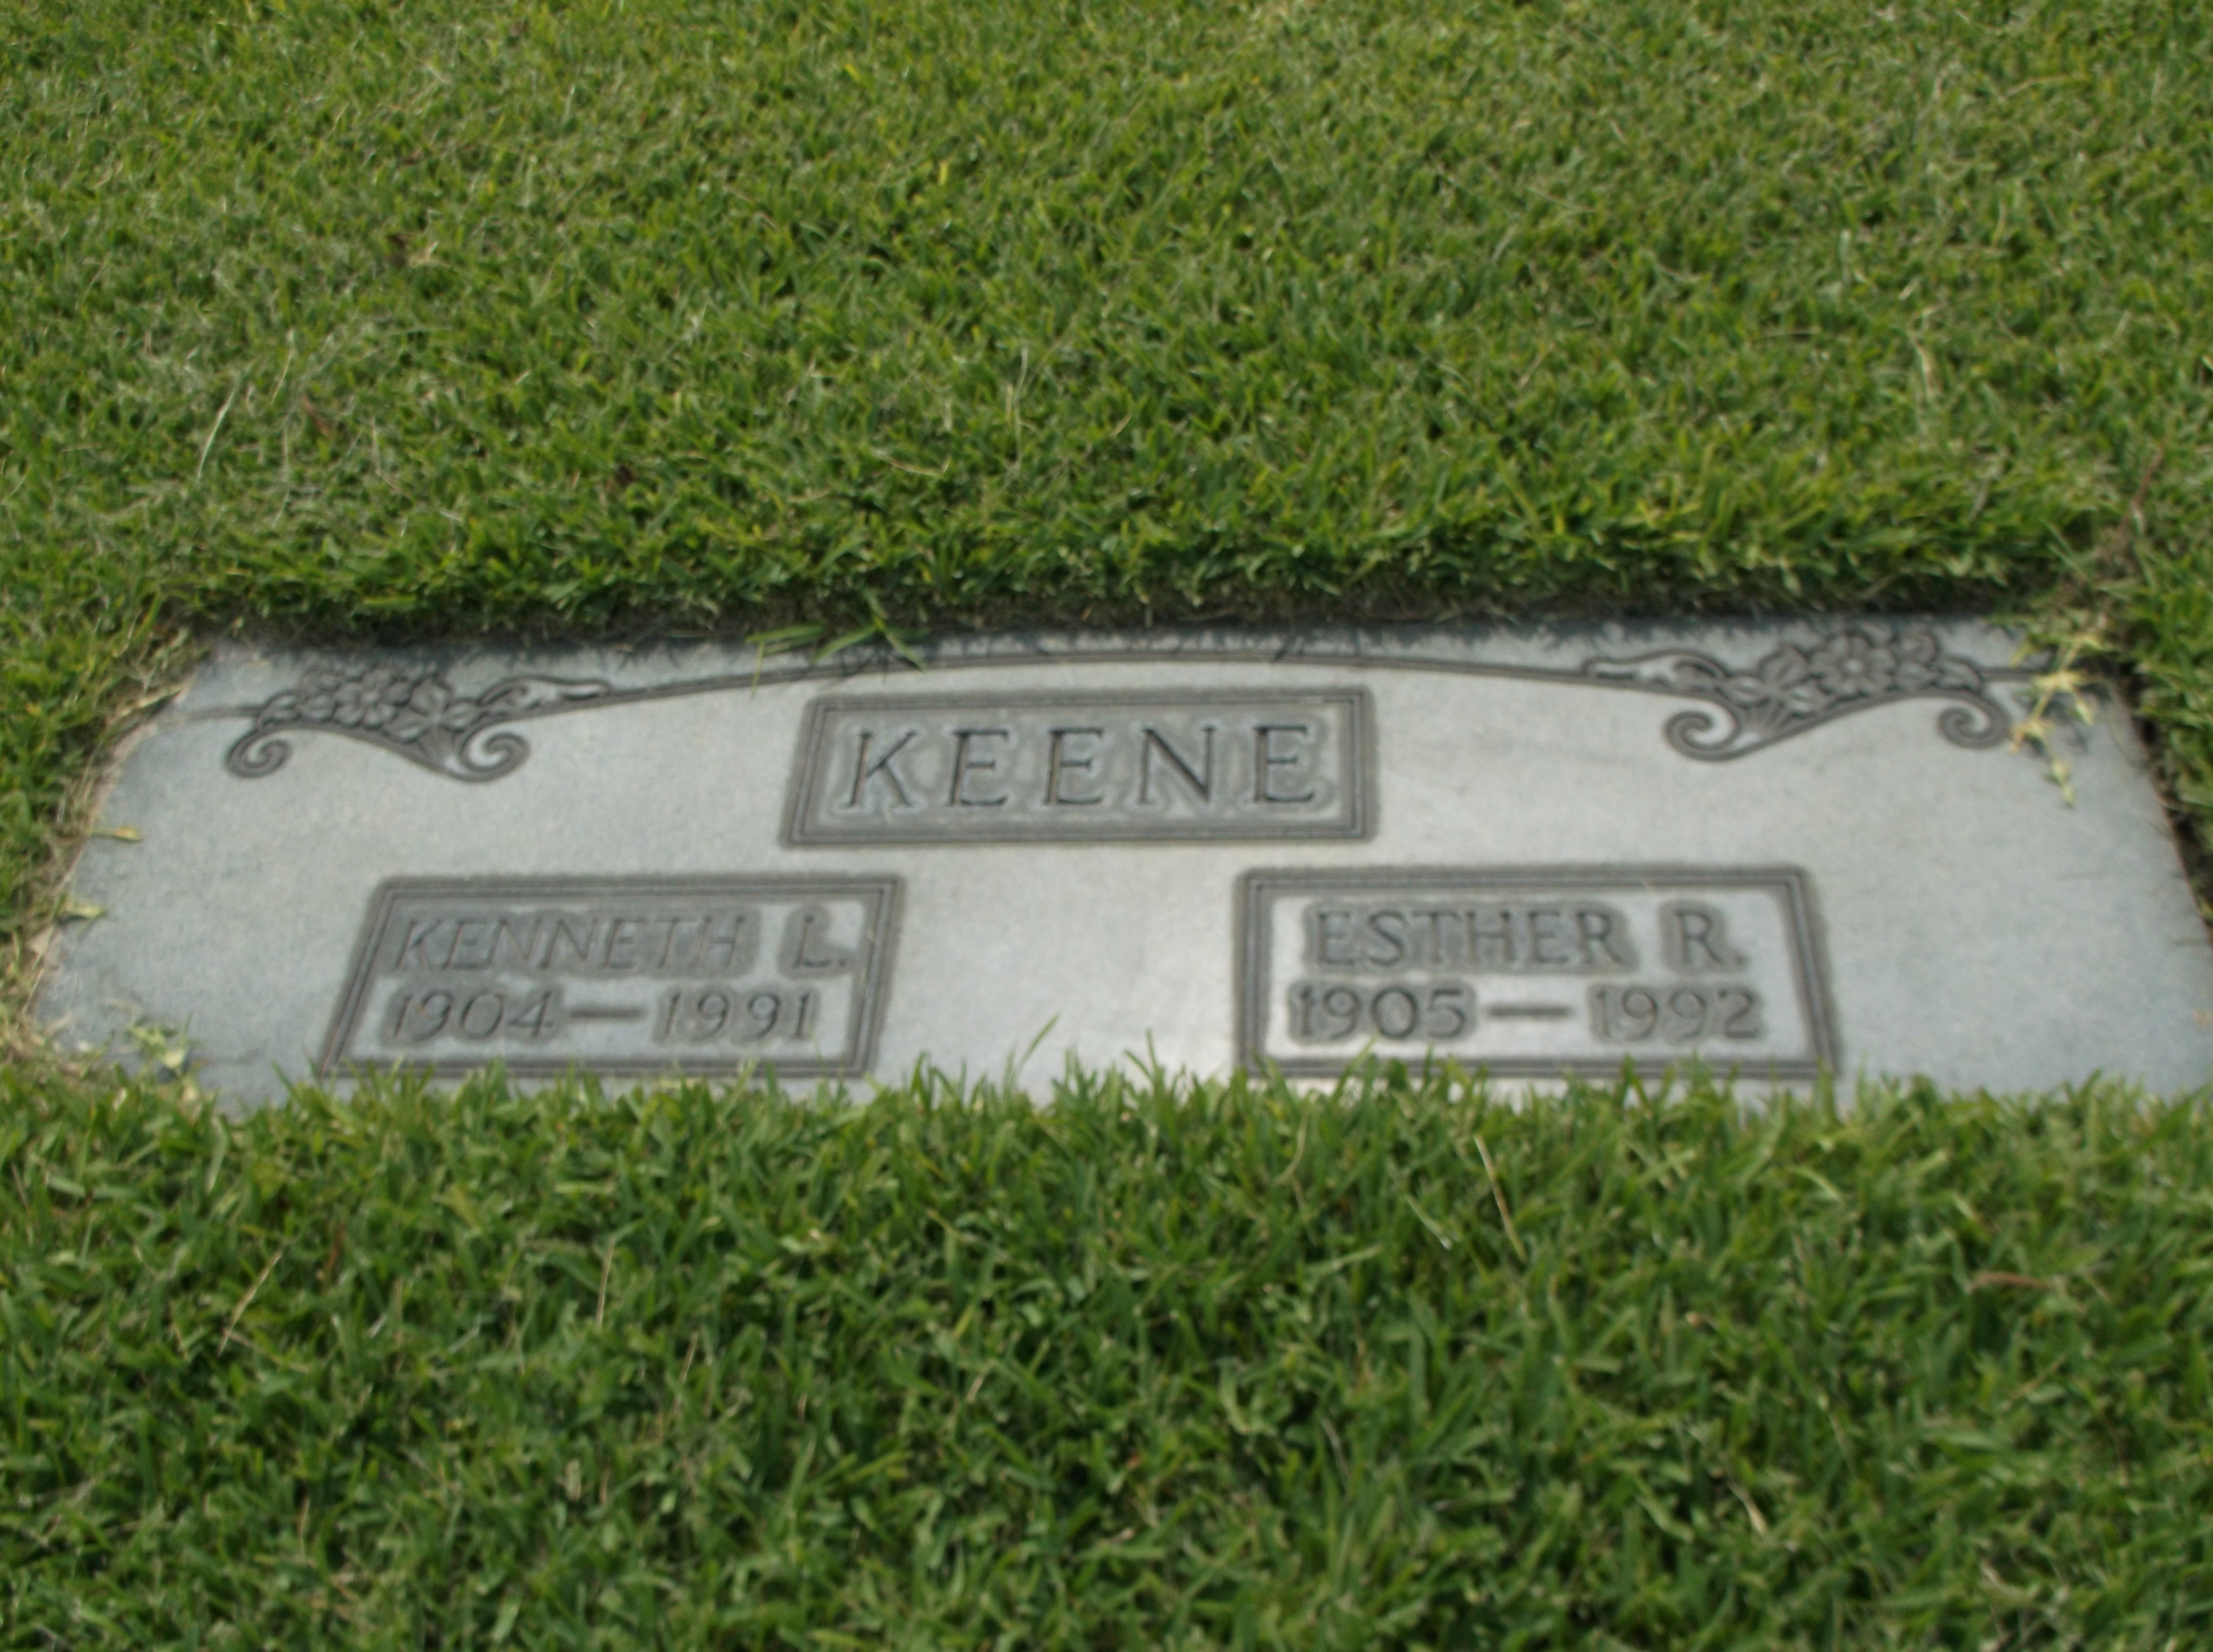 Kenneth L Keene